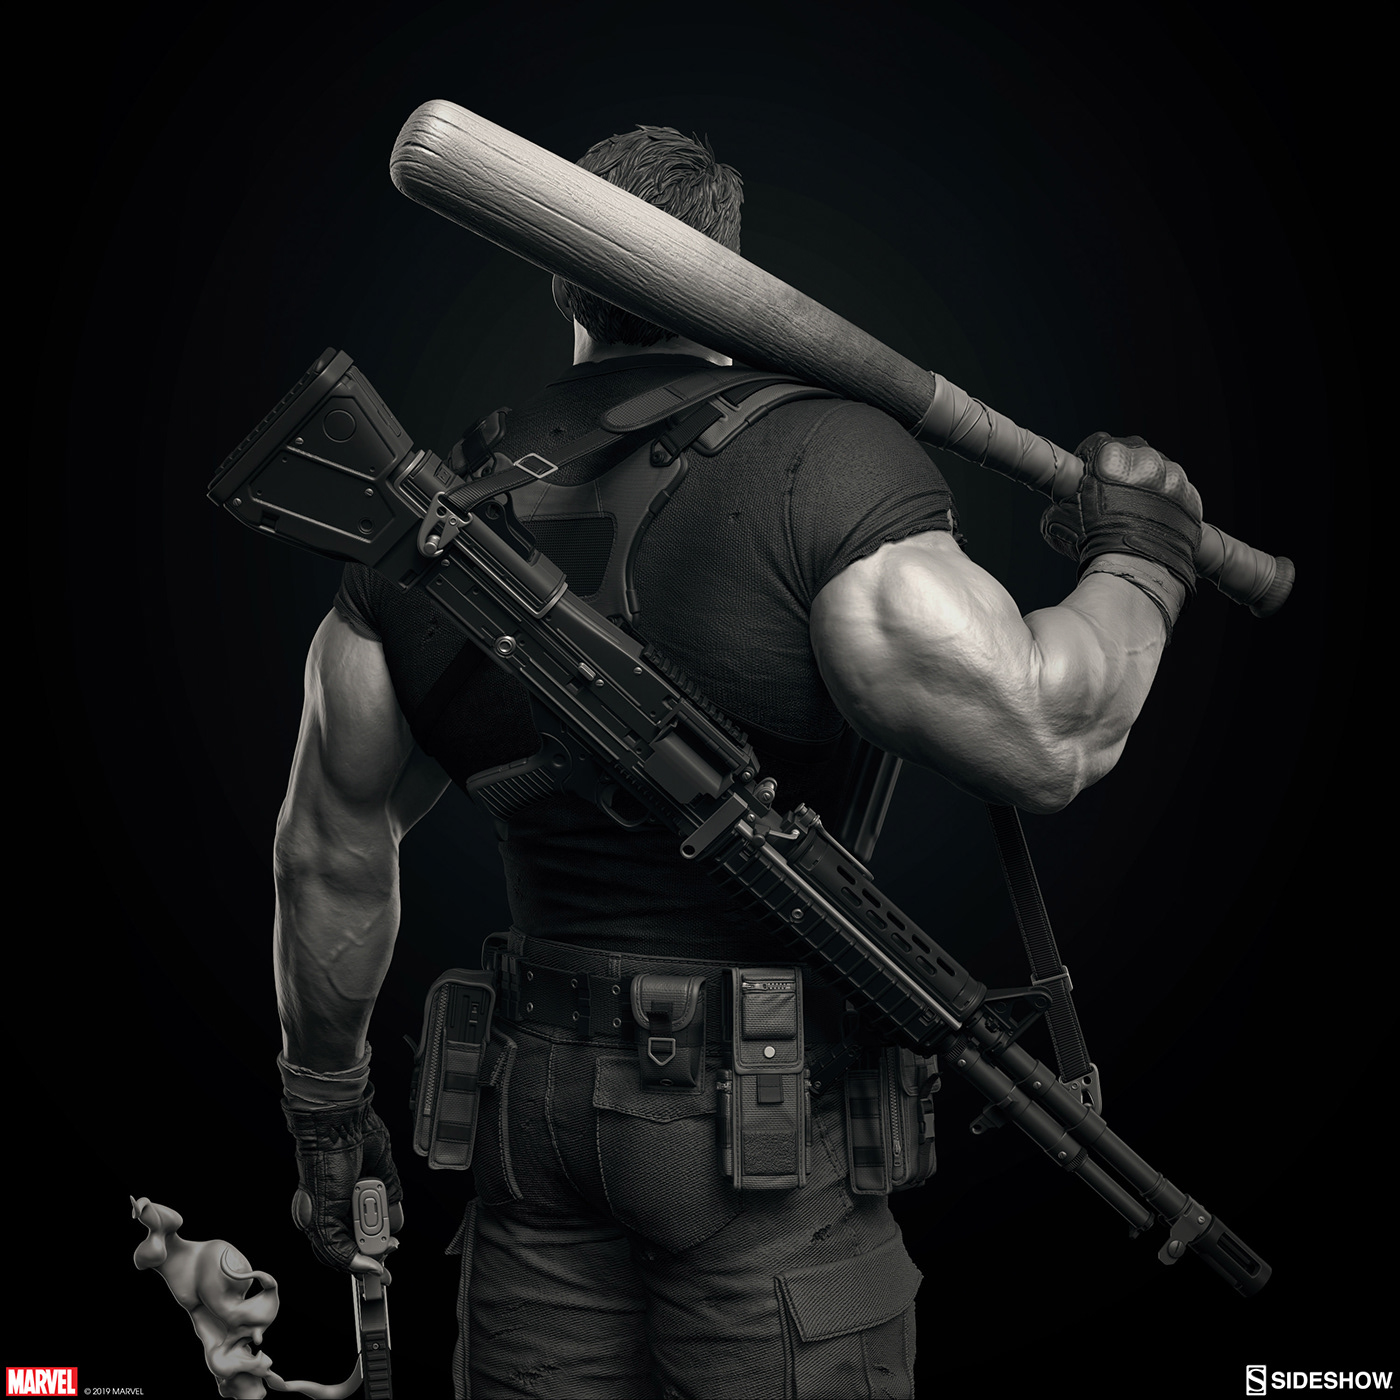 skull evil dark Mad Punish violent army Gun Weapon mercenary